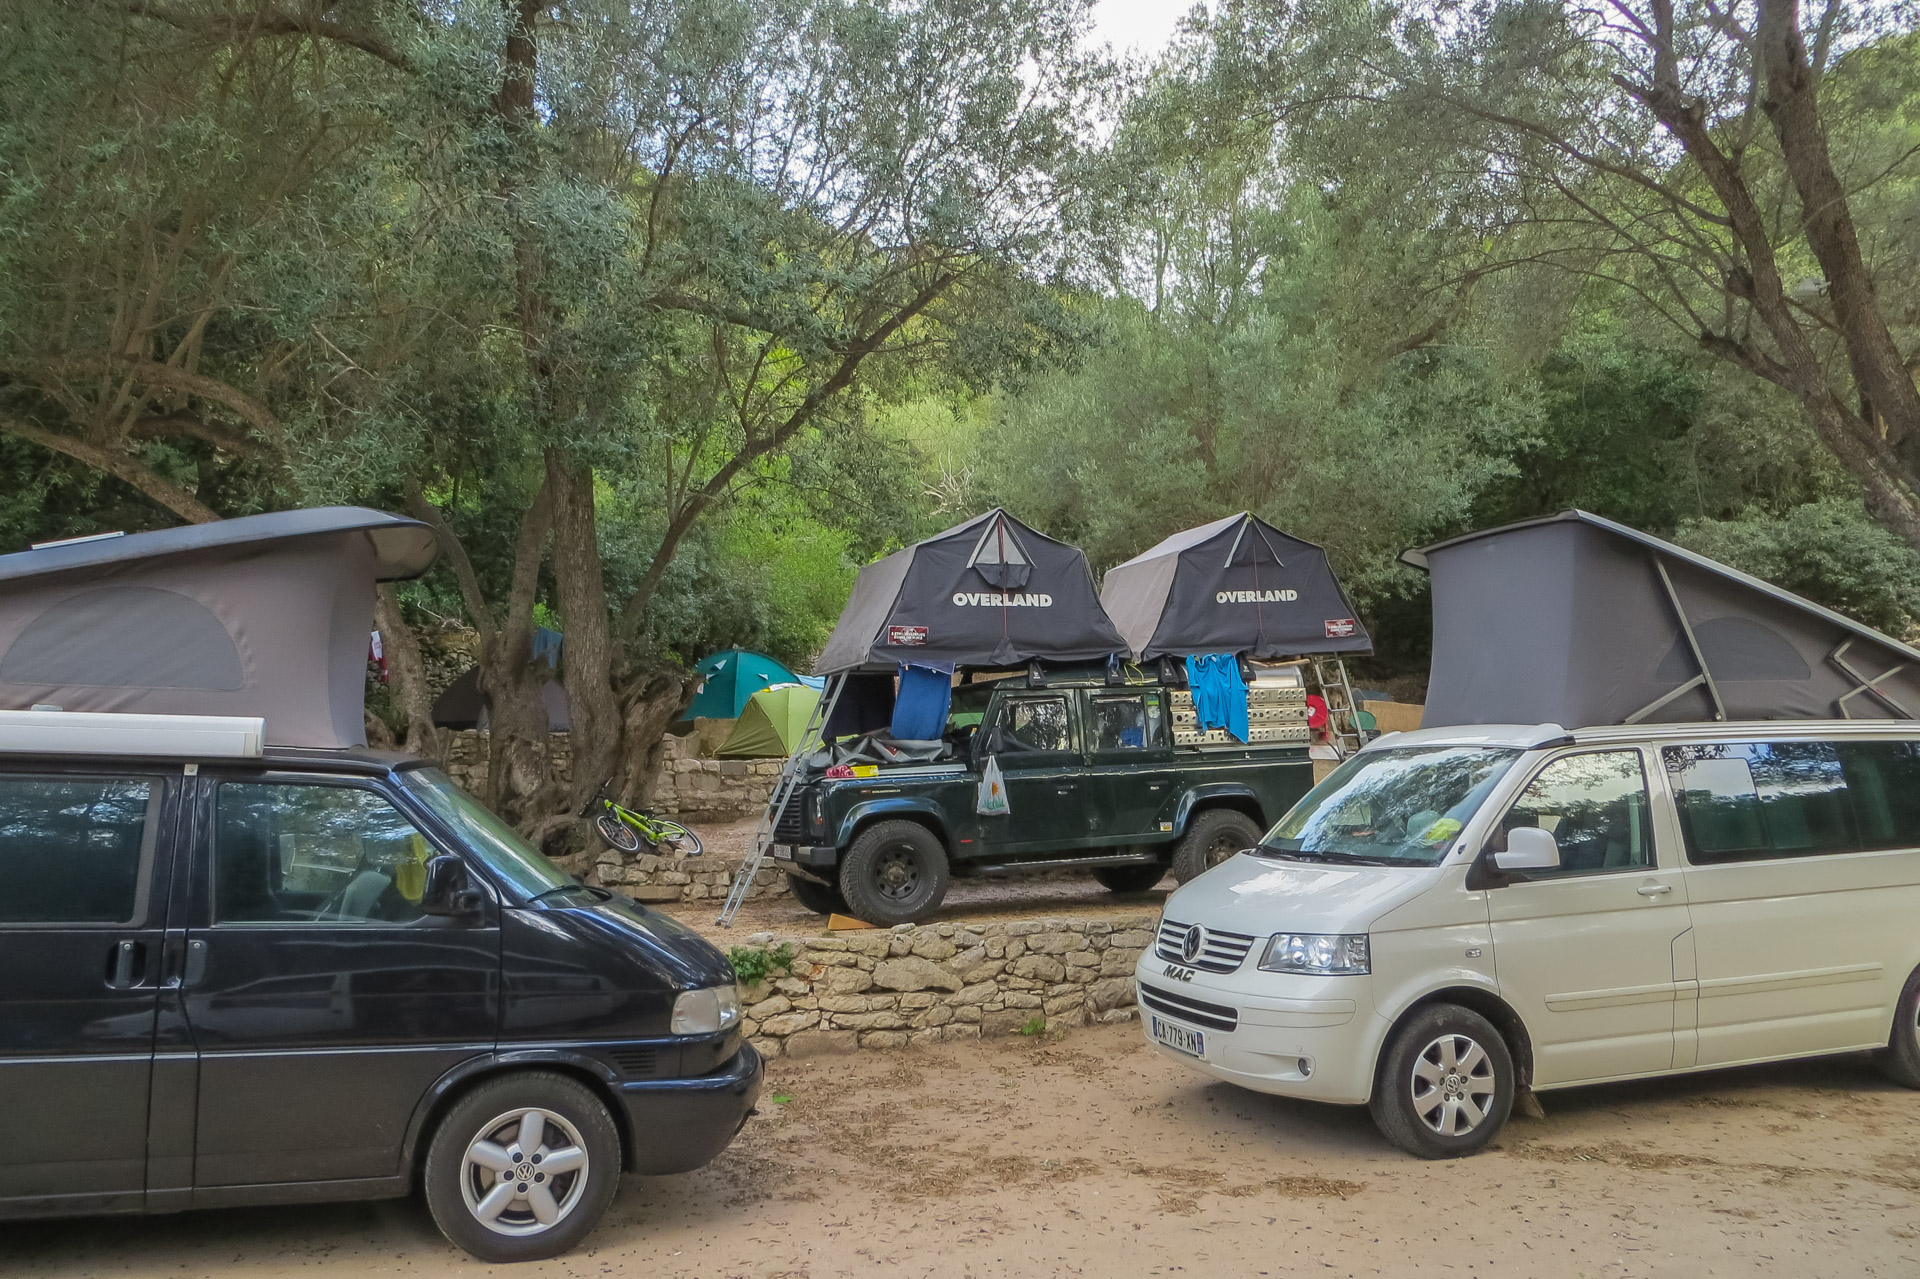 Camping L'Araguina